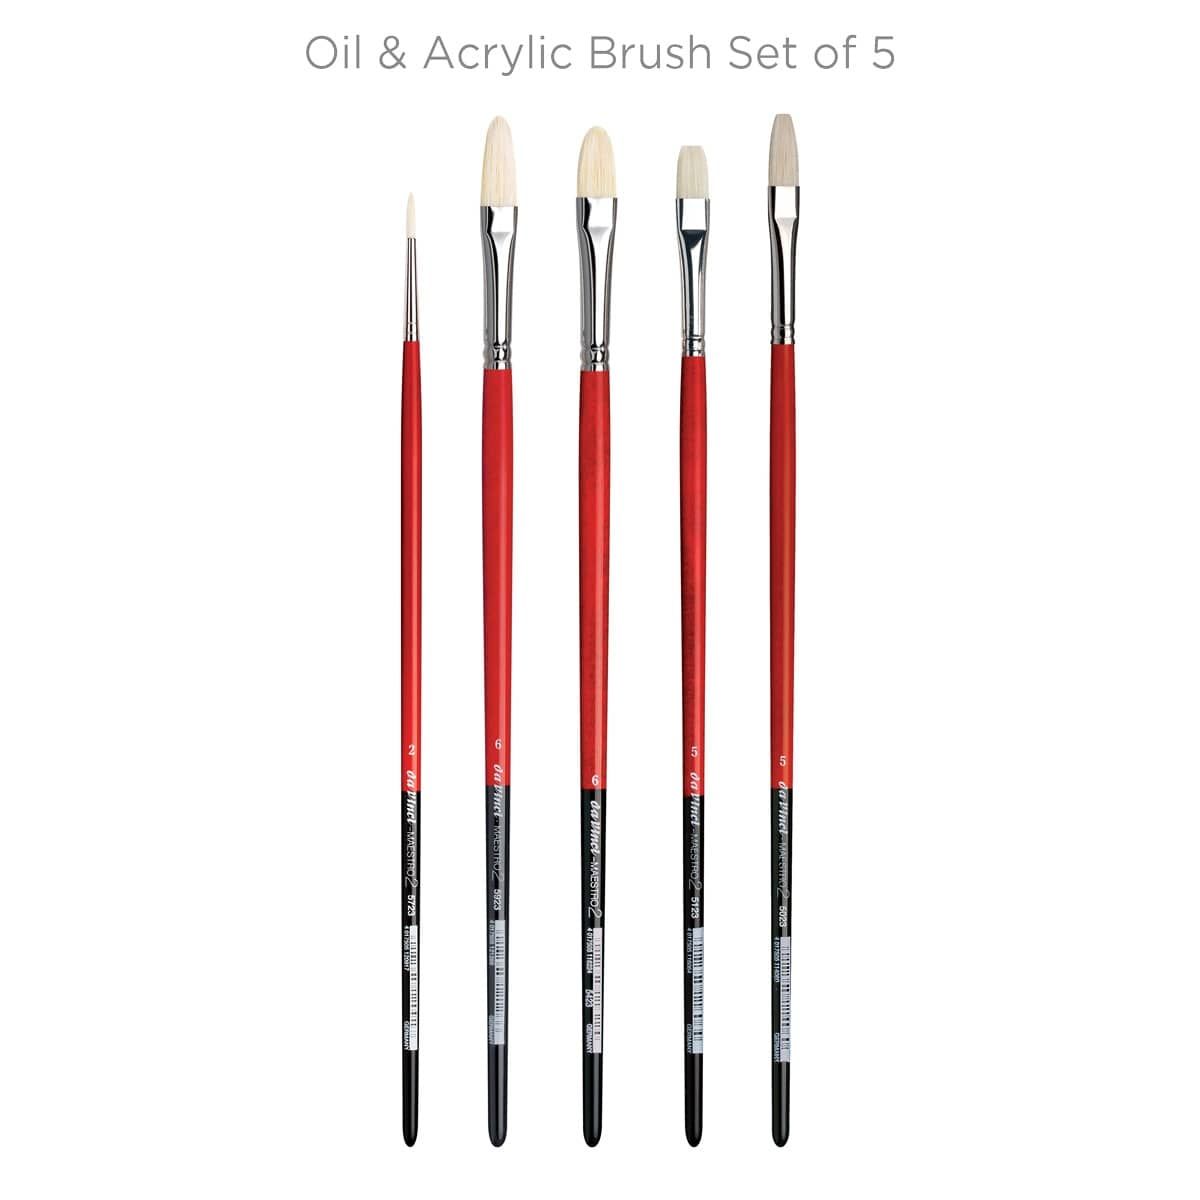 Oil & Acrylic Brush Set of 5